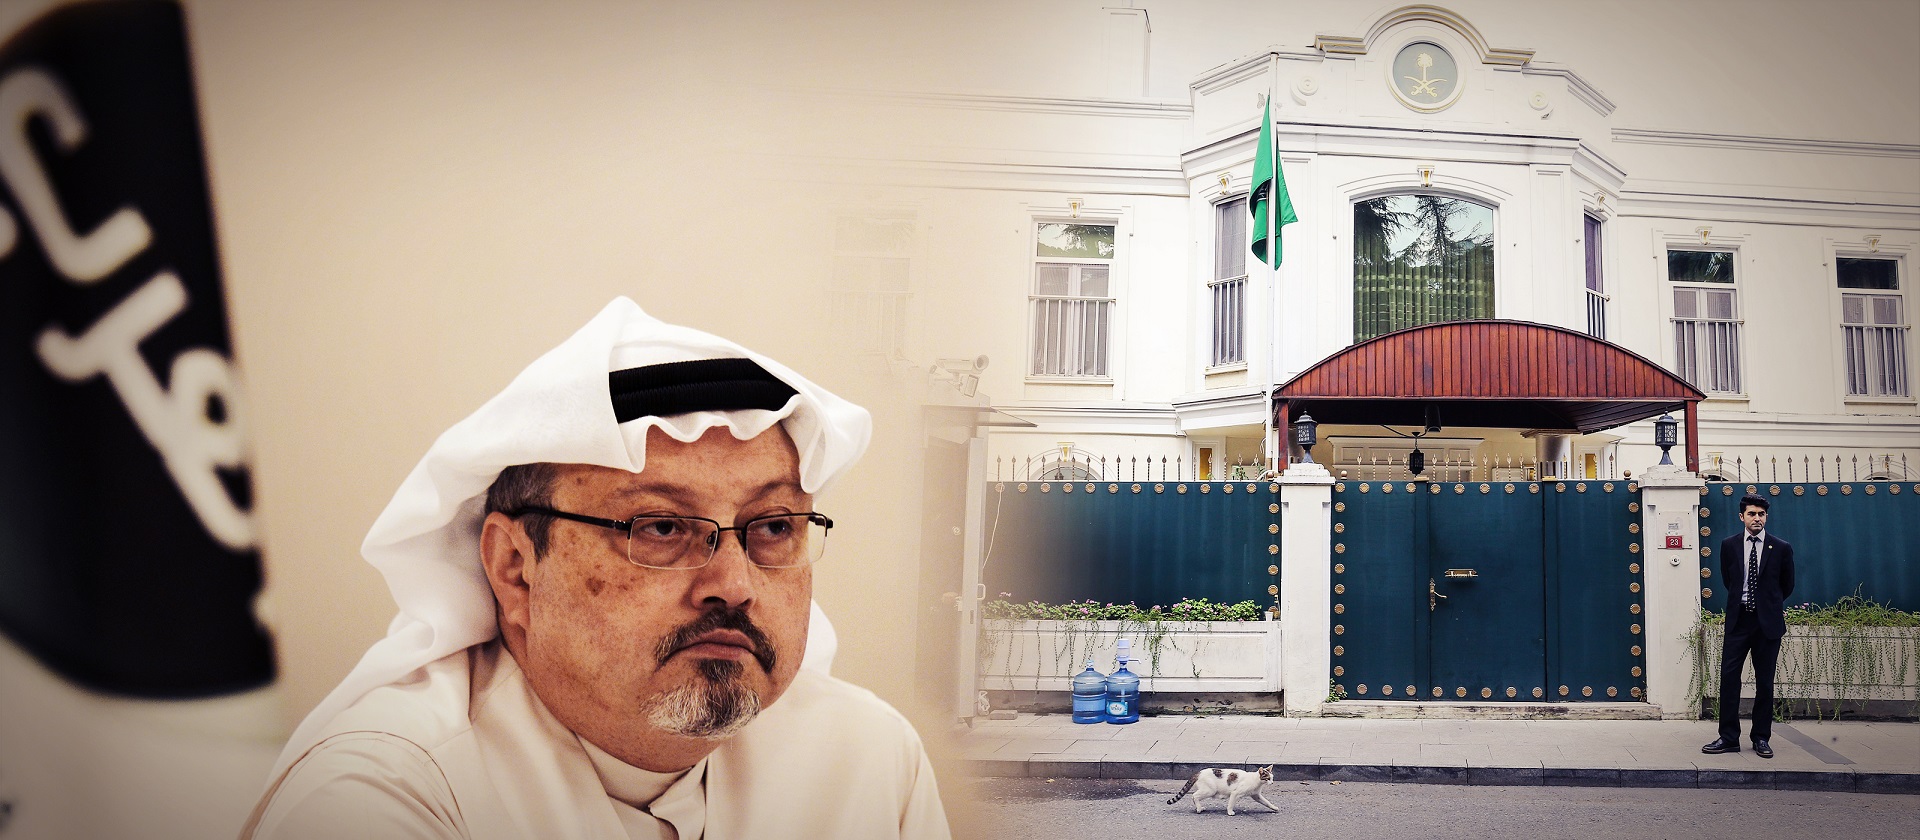 The Heat: Disappearance of journalist Jamal Khashoggi